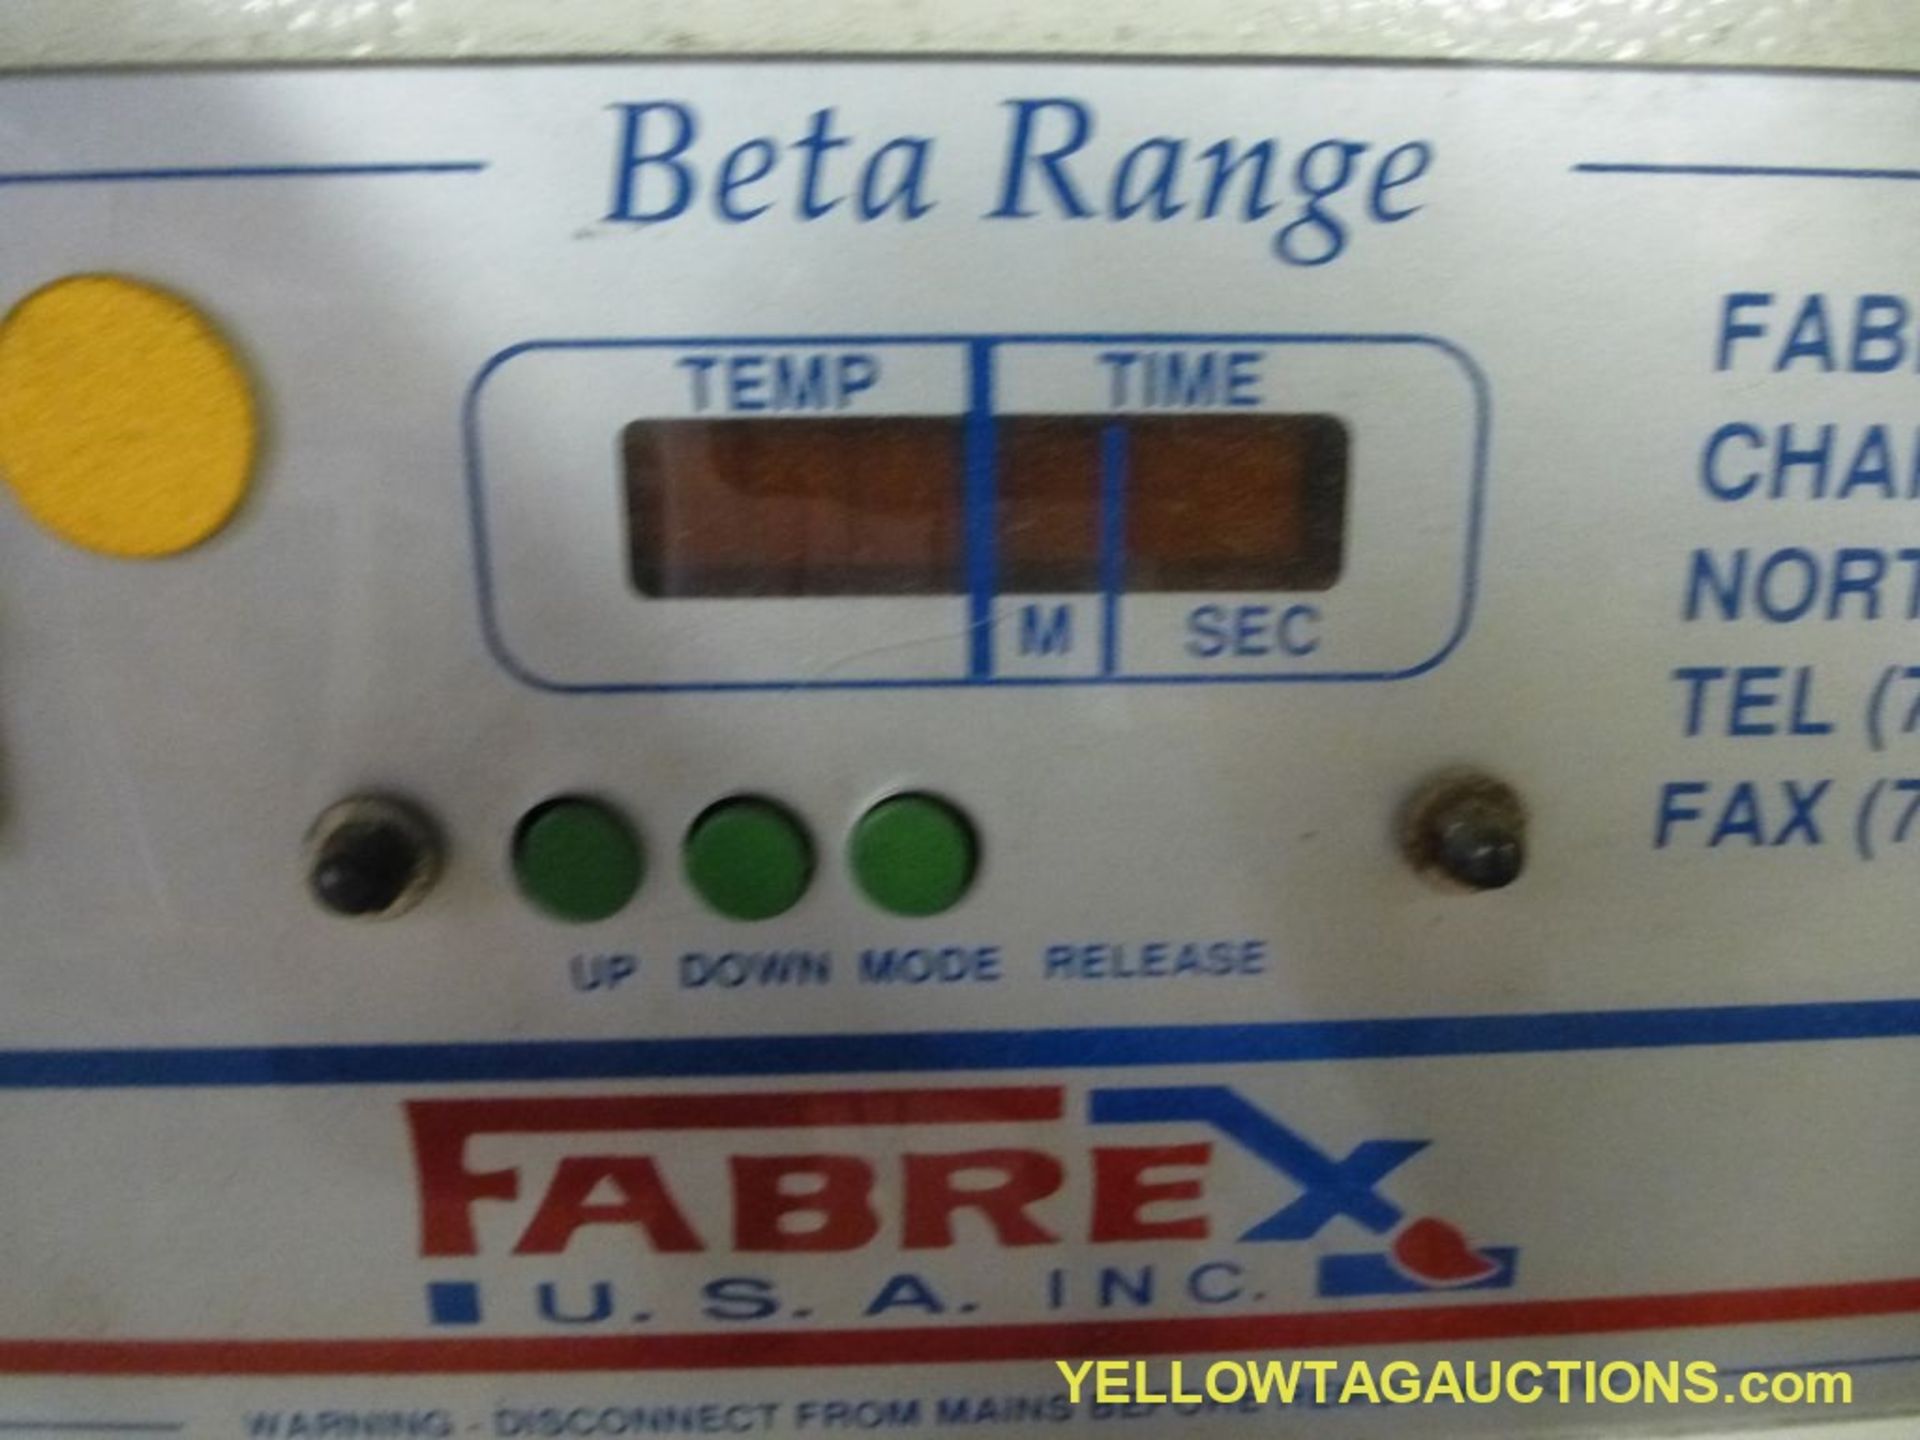 Fabrey Beta Range|Location: Charlotte, NC - Image 4 of 5